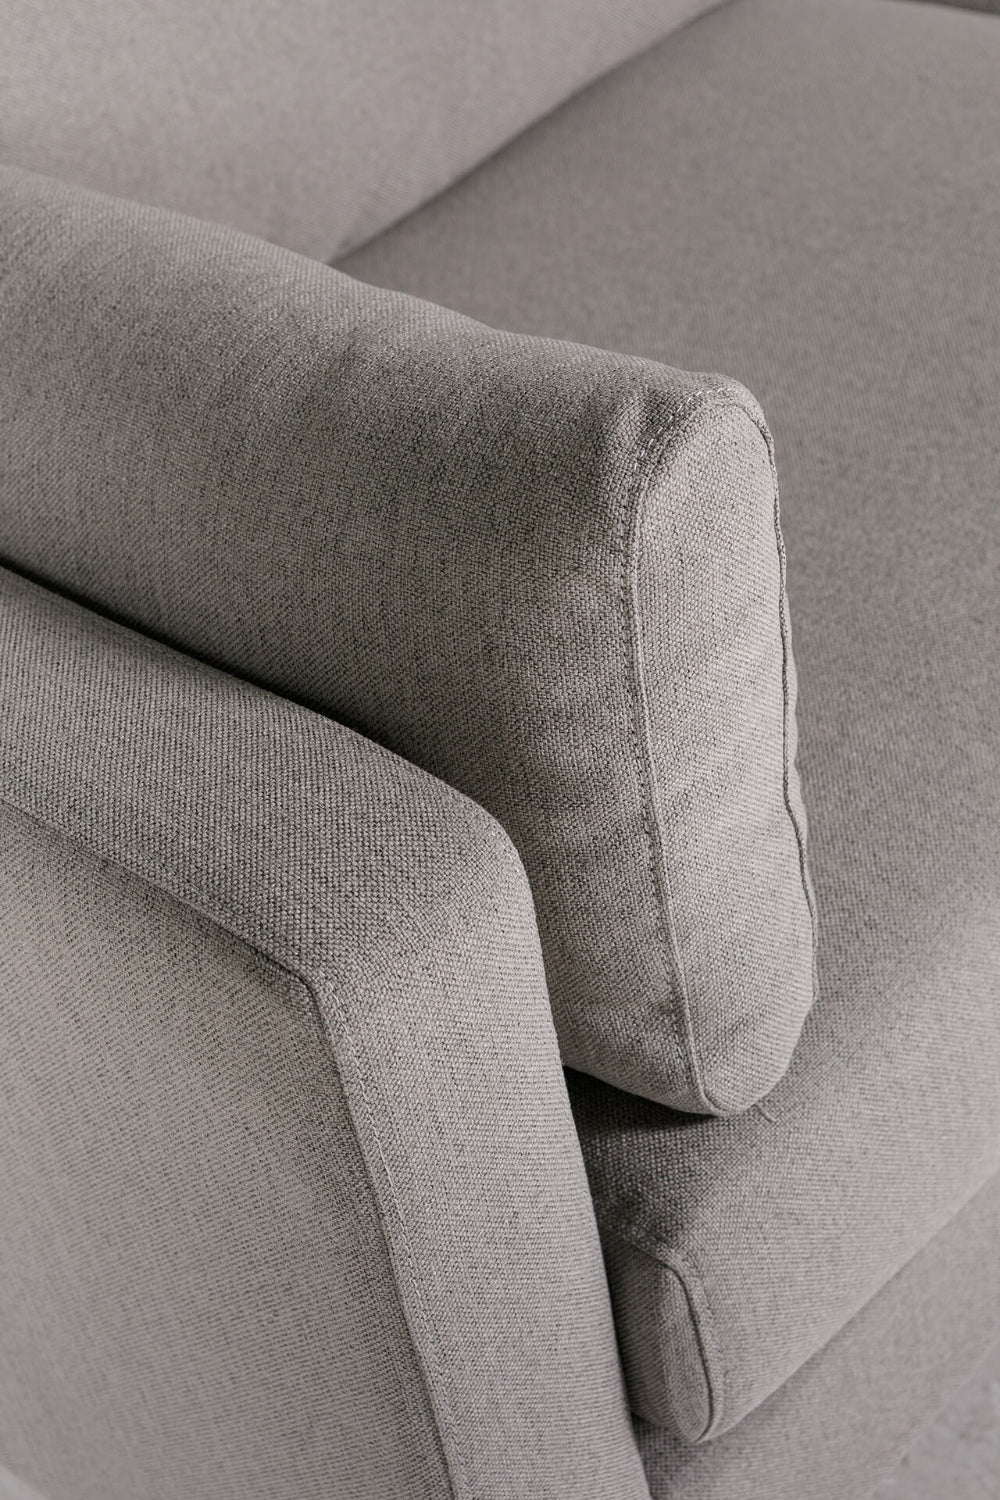 Apollo Sofa Greige Cushion and Armrest Detail 2